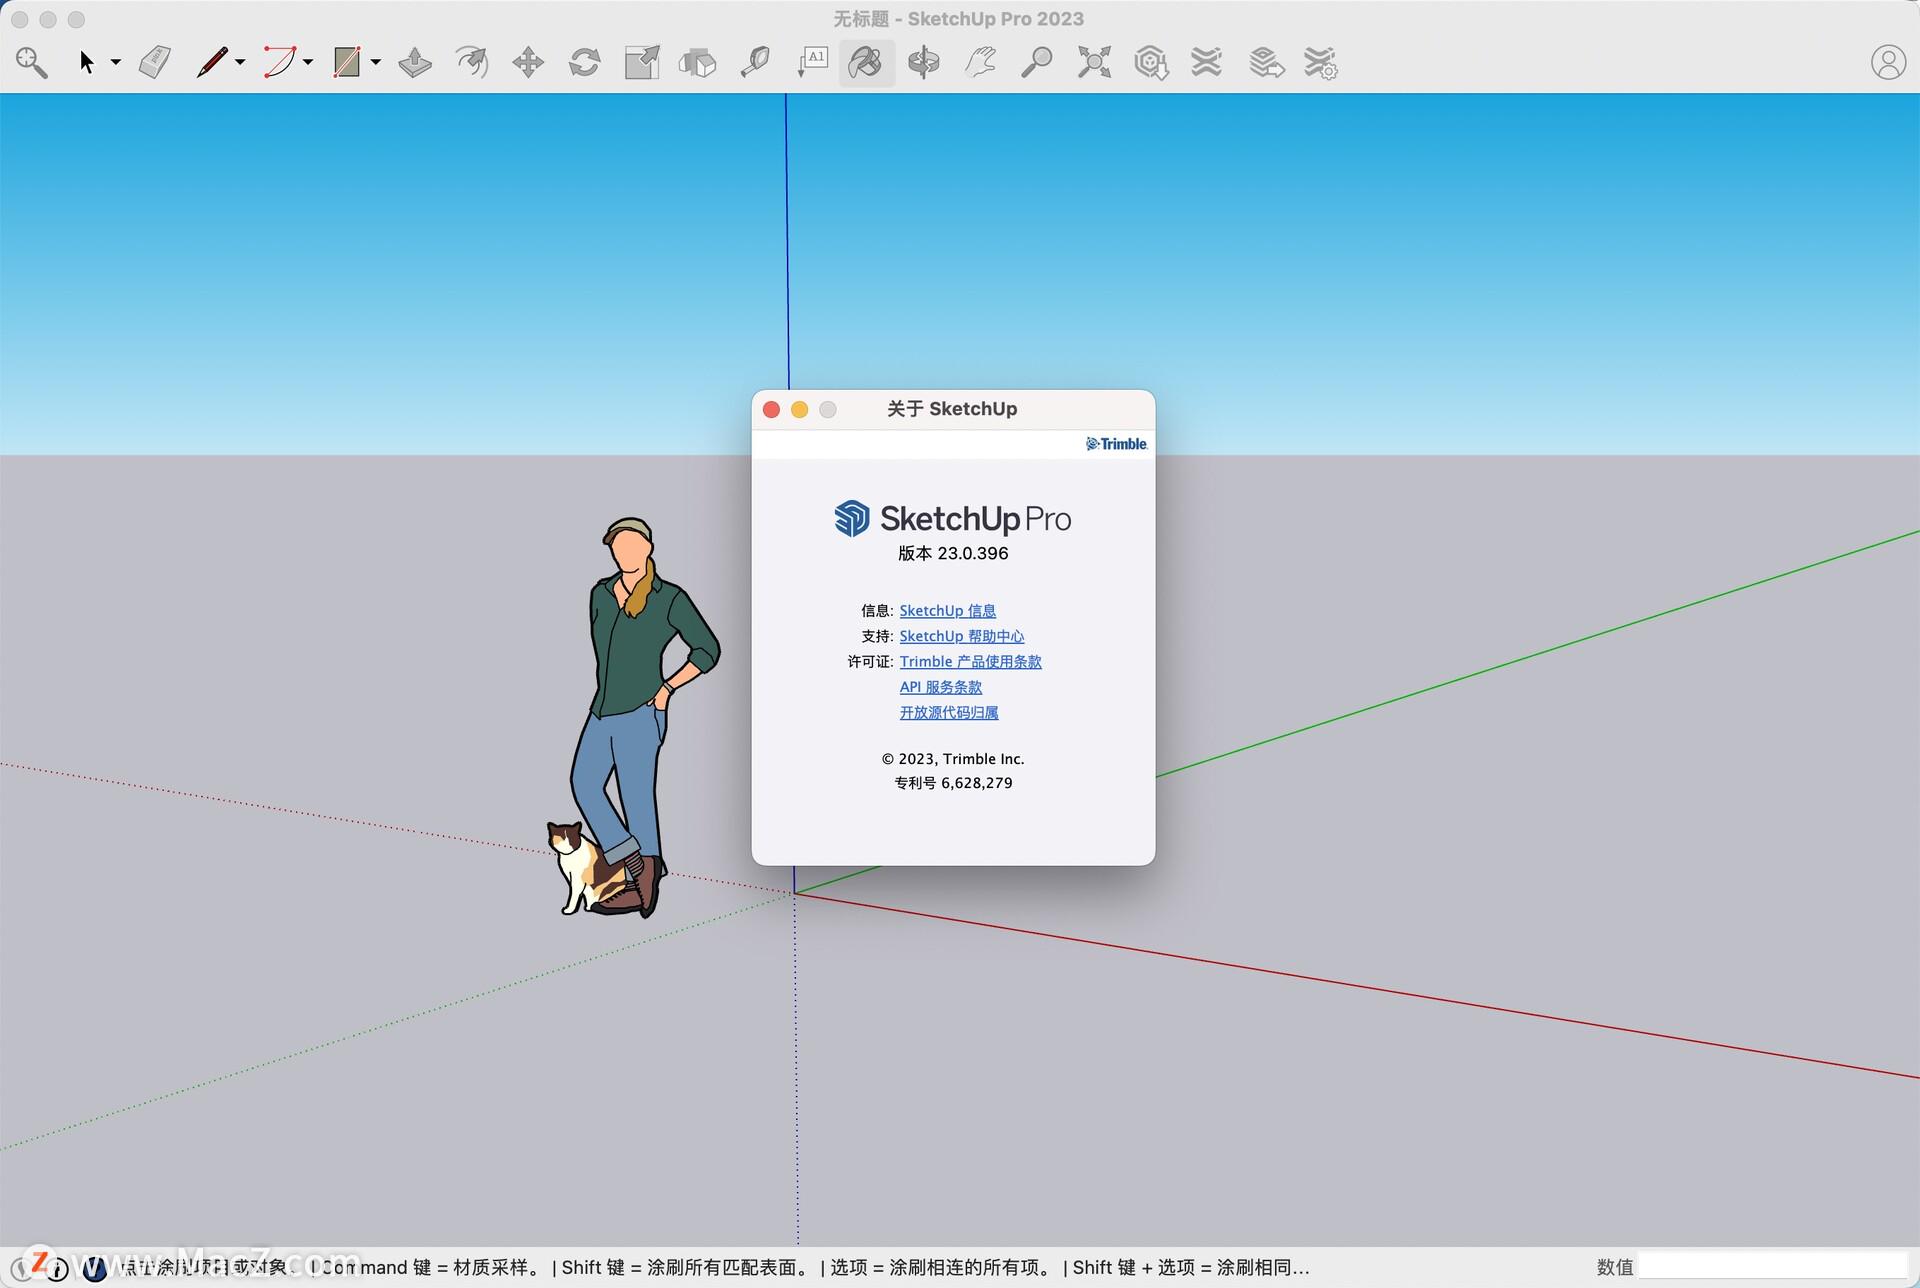 SketchUp Pro 2023 v23.1.329 download the new version